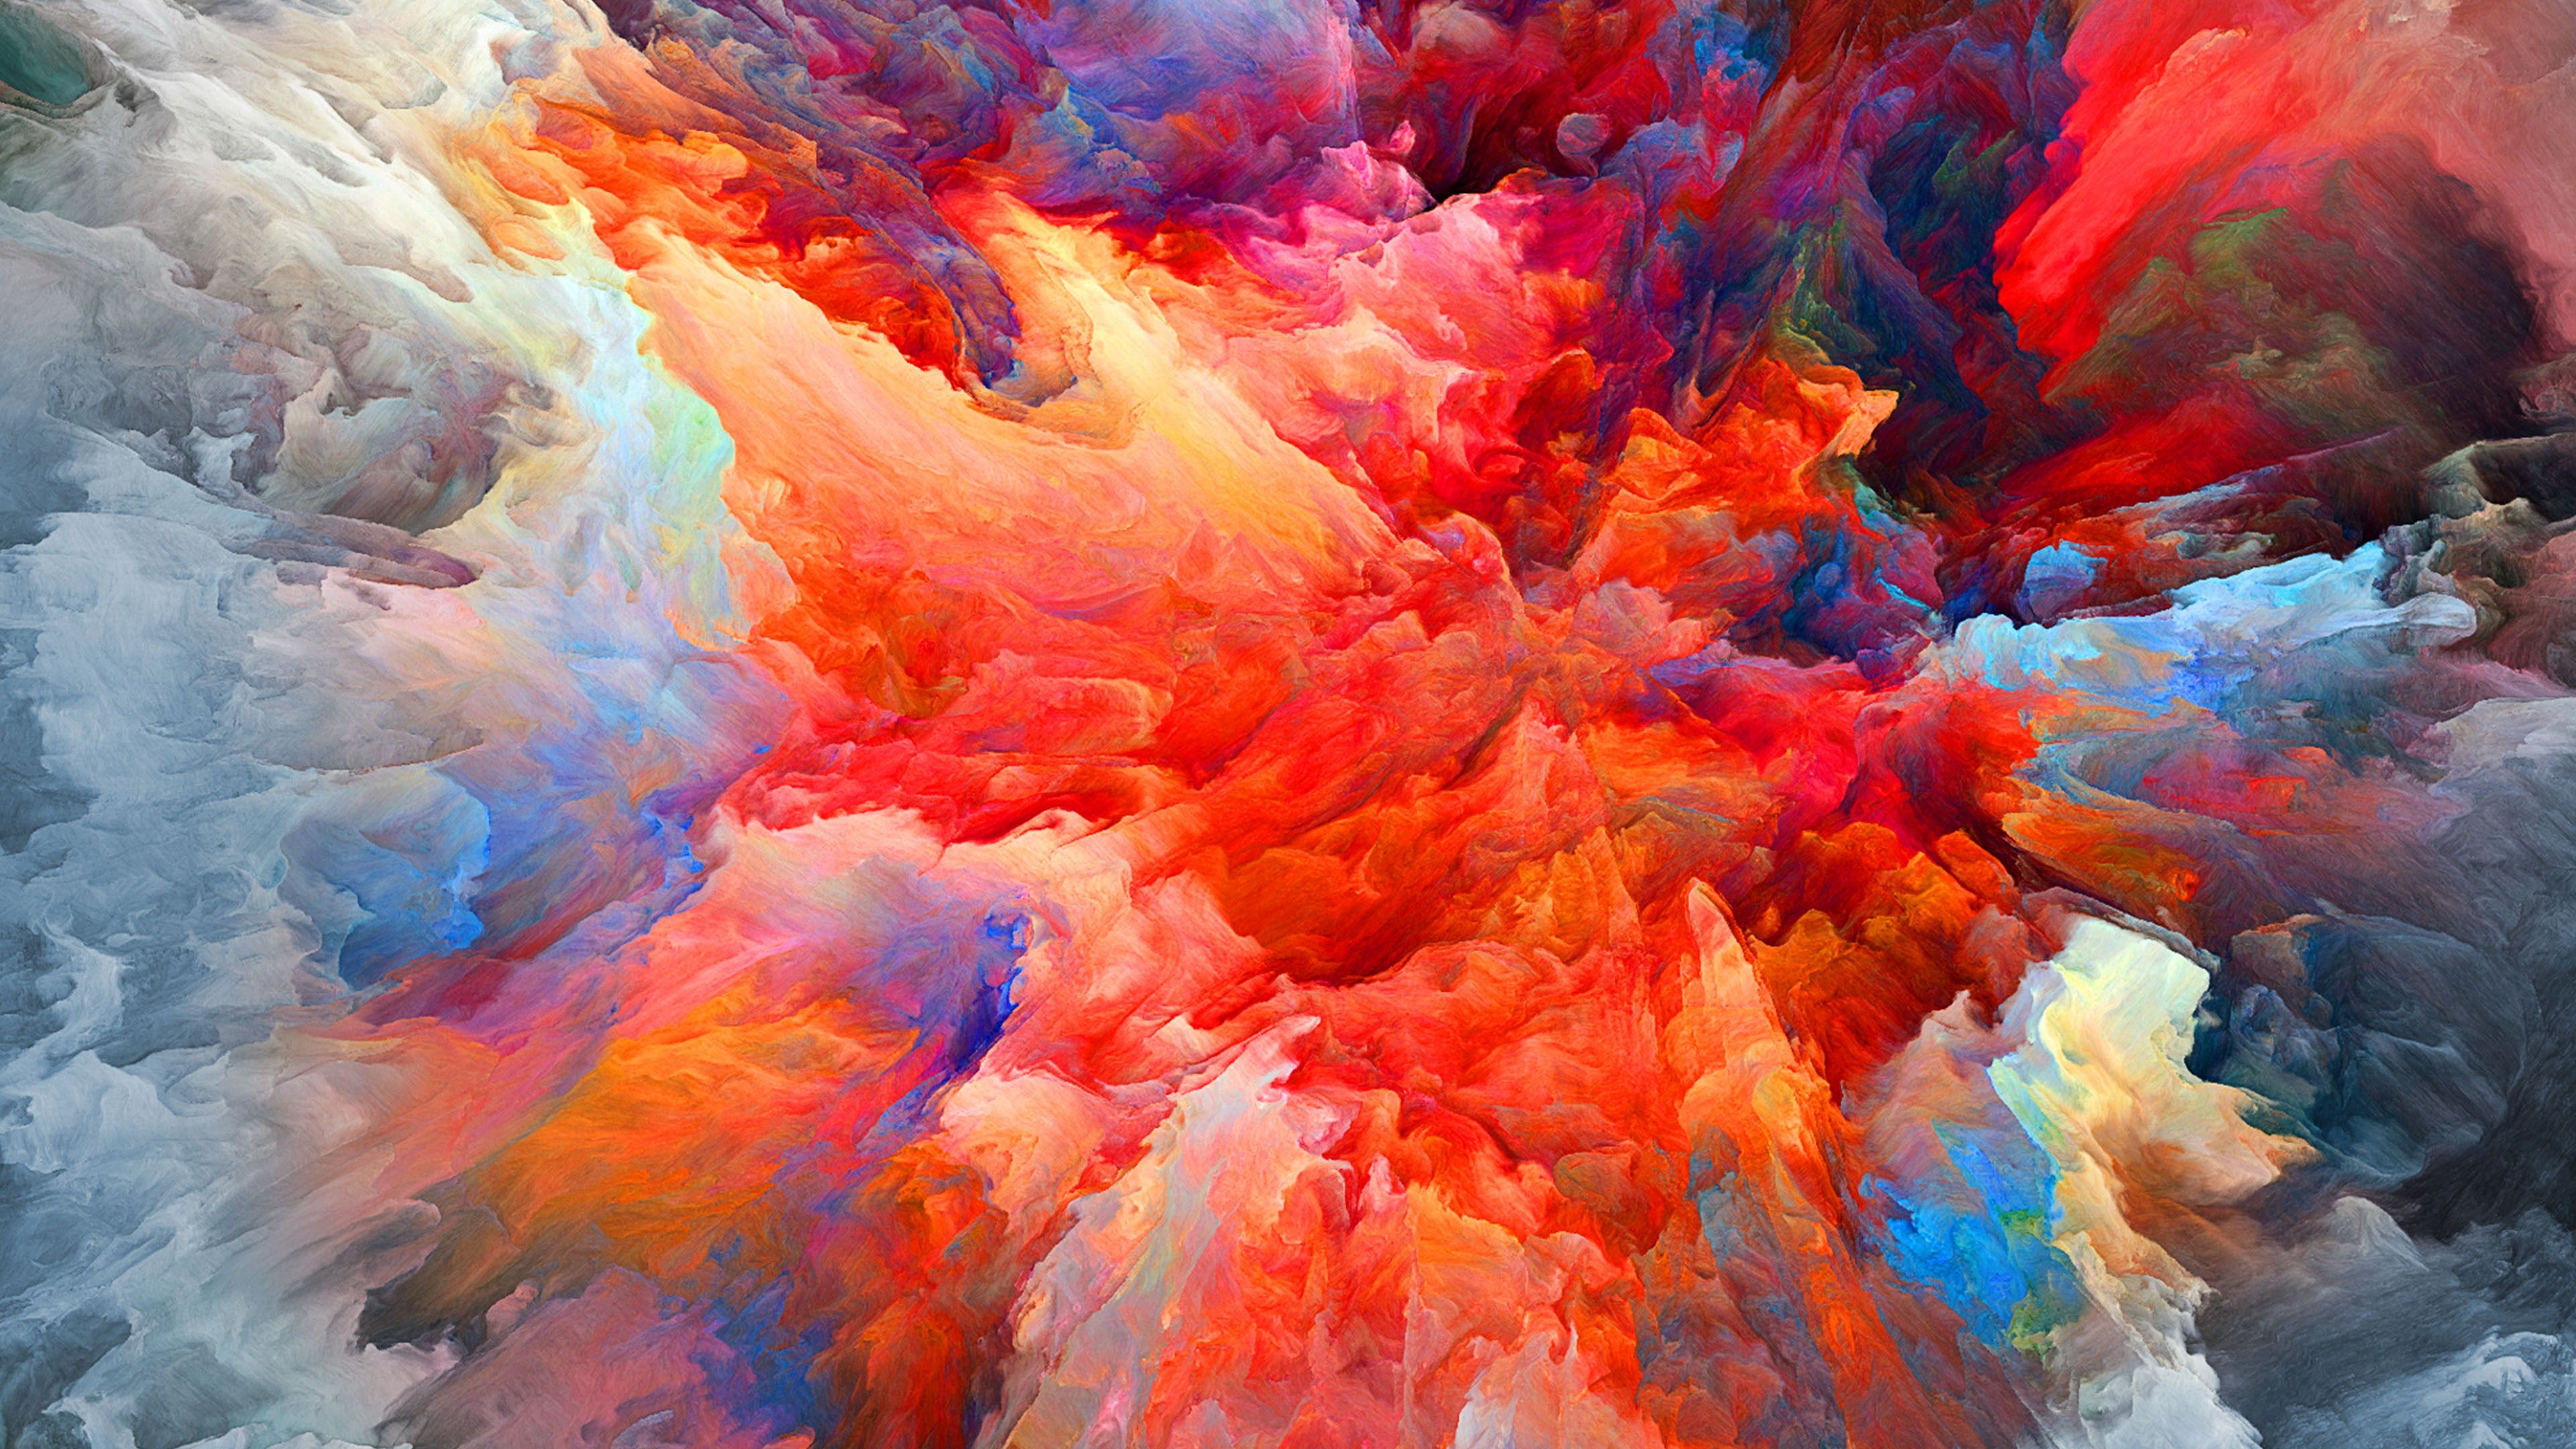 Colorful Blast of Smoke 4k Ultra HD Wallpaper